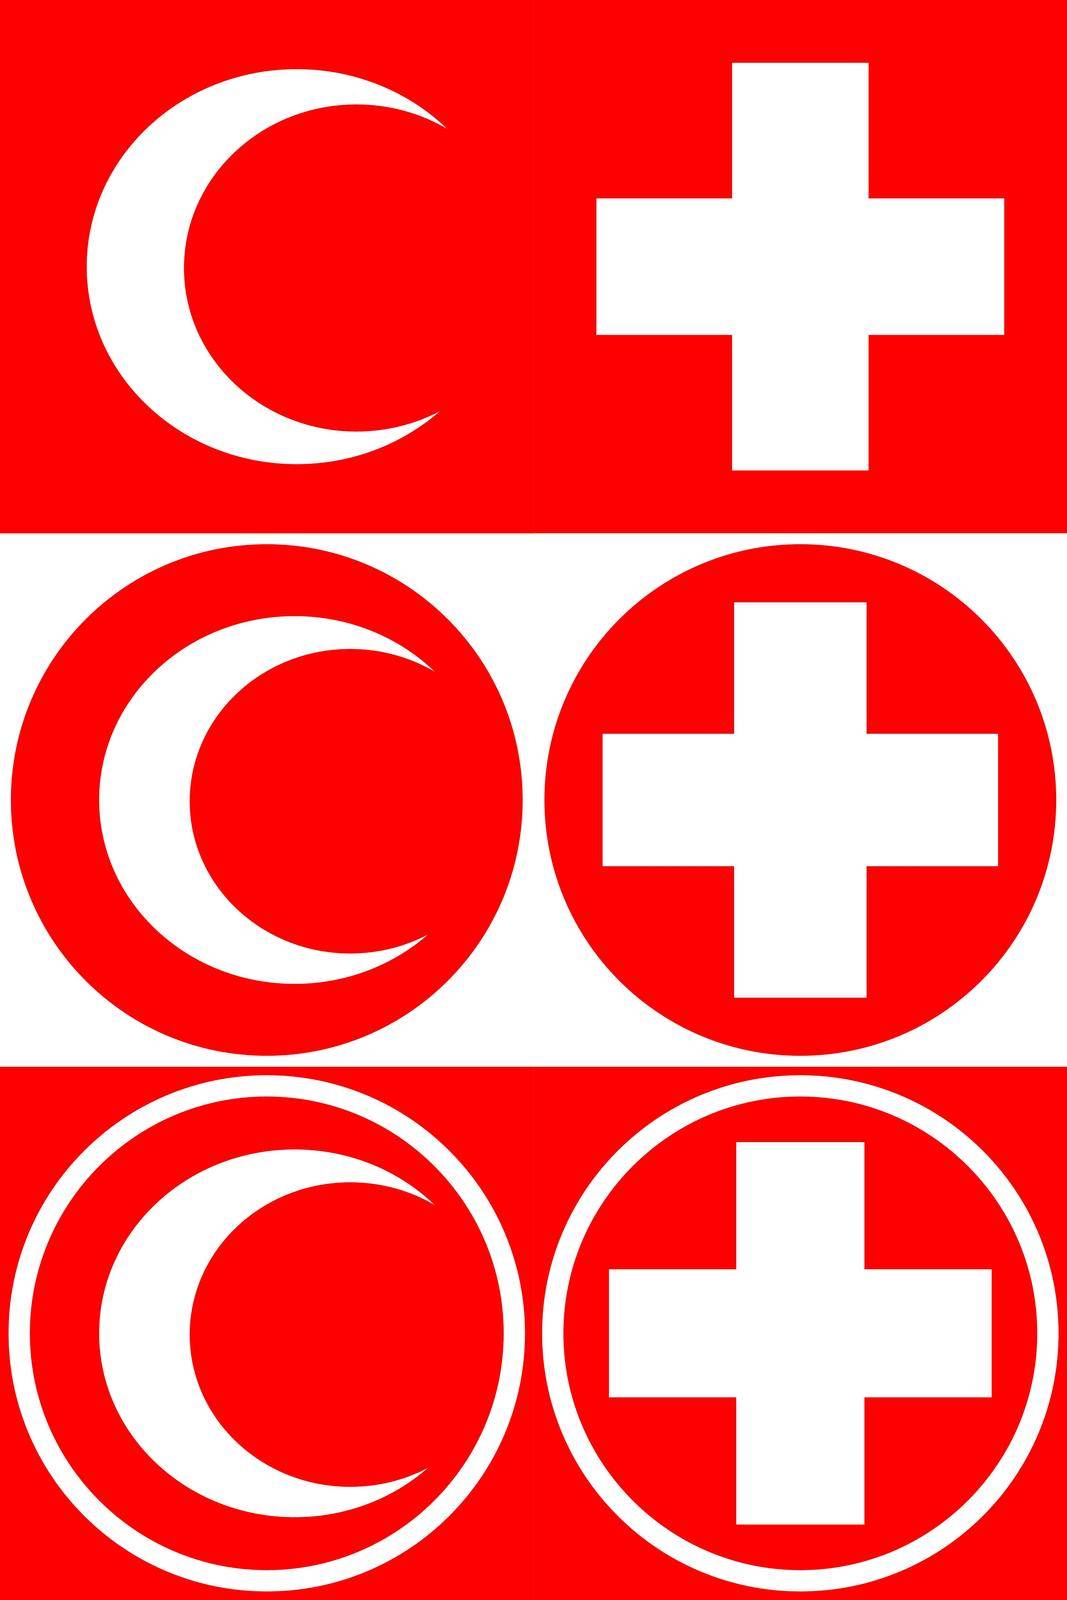 Medical cross and medical crescent. A set of options for medical symbols. Vector illustration by Nikolaiev_Oleksii